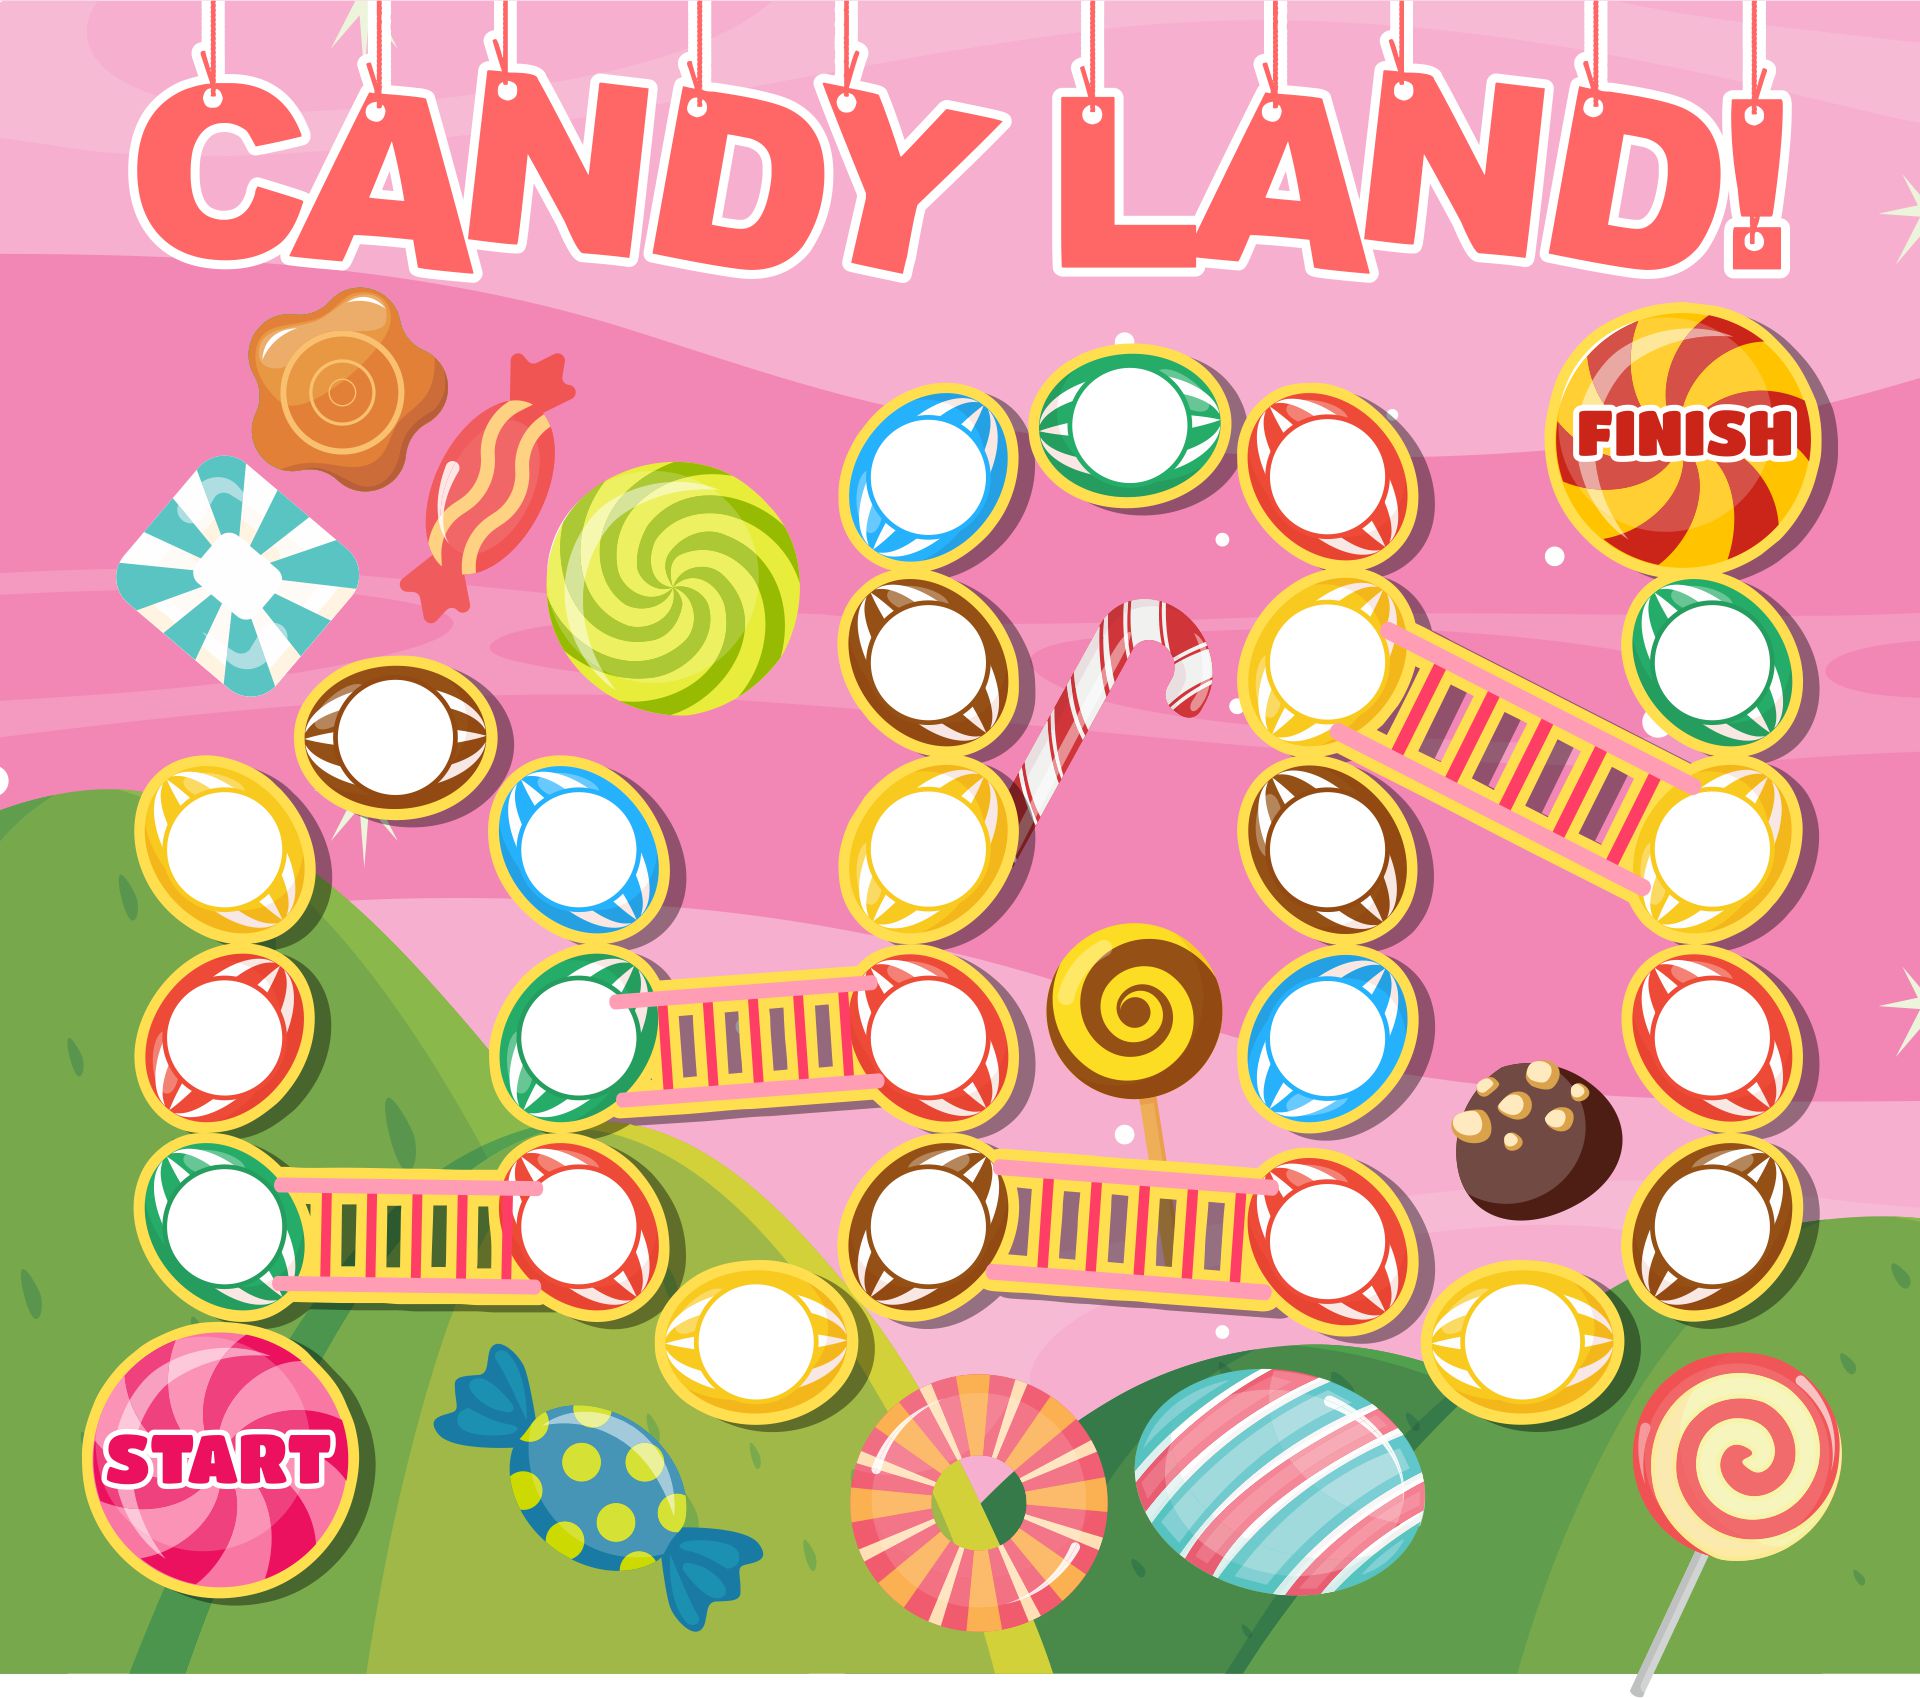 4-best-images-of-printable-candyland-board-game-candyland-game-board-template-candy-land